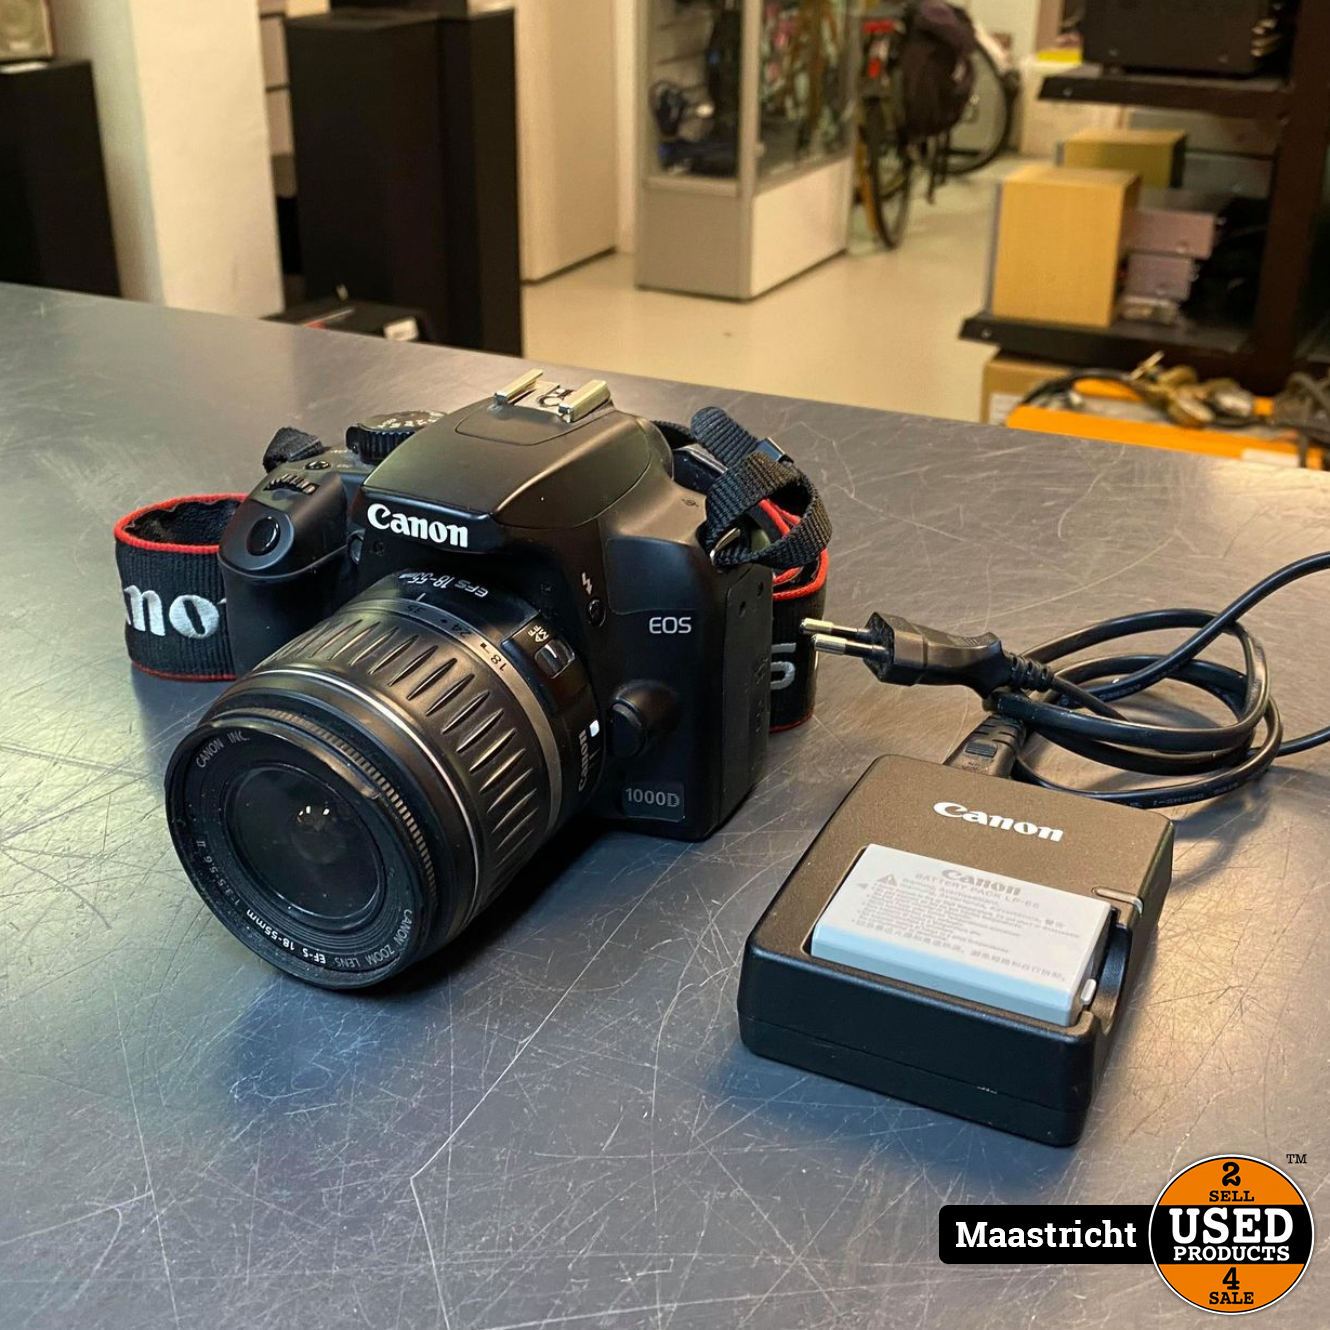 CANON EOS1000D spiegelreflex camera - Used Maasstricht